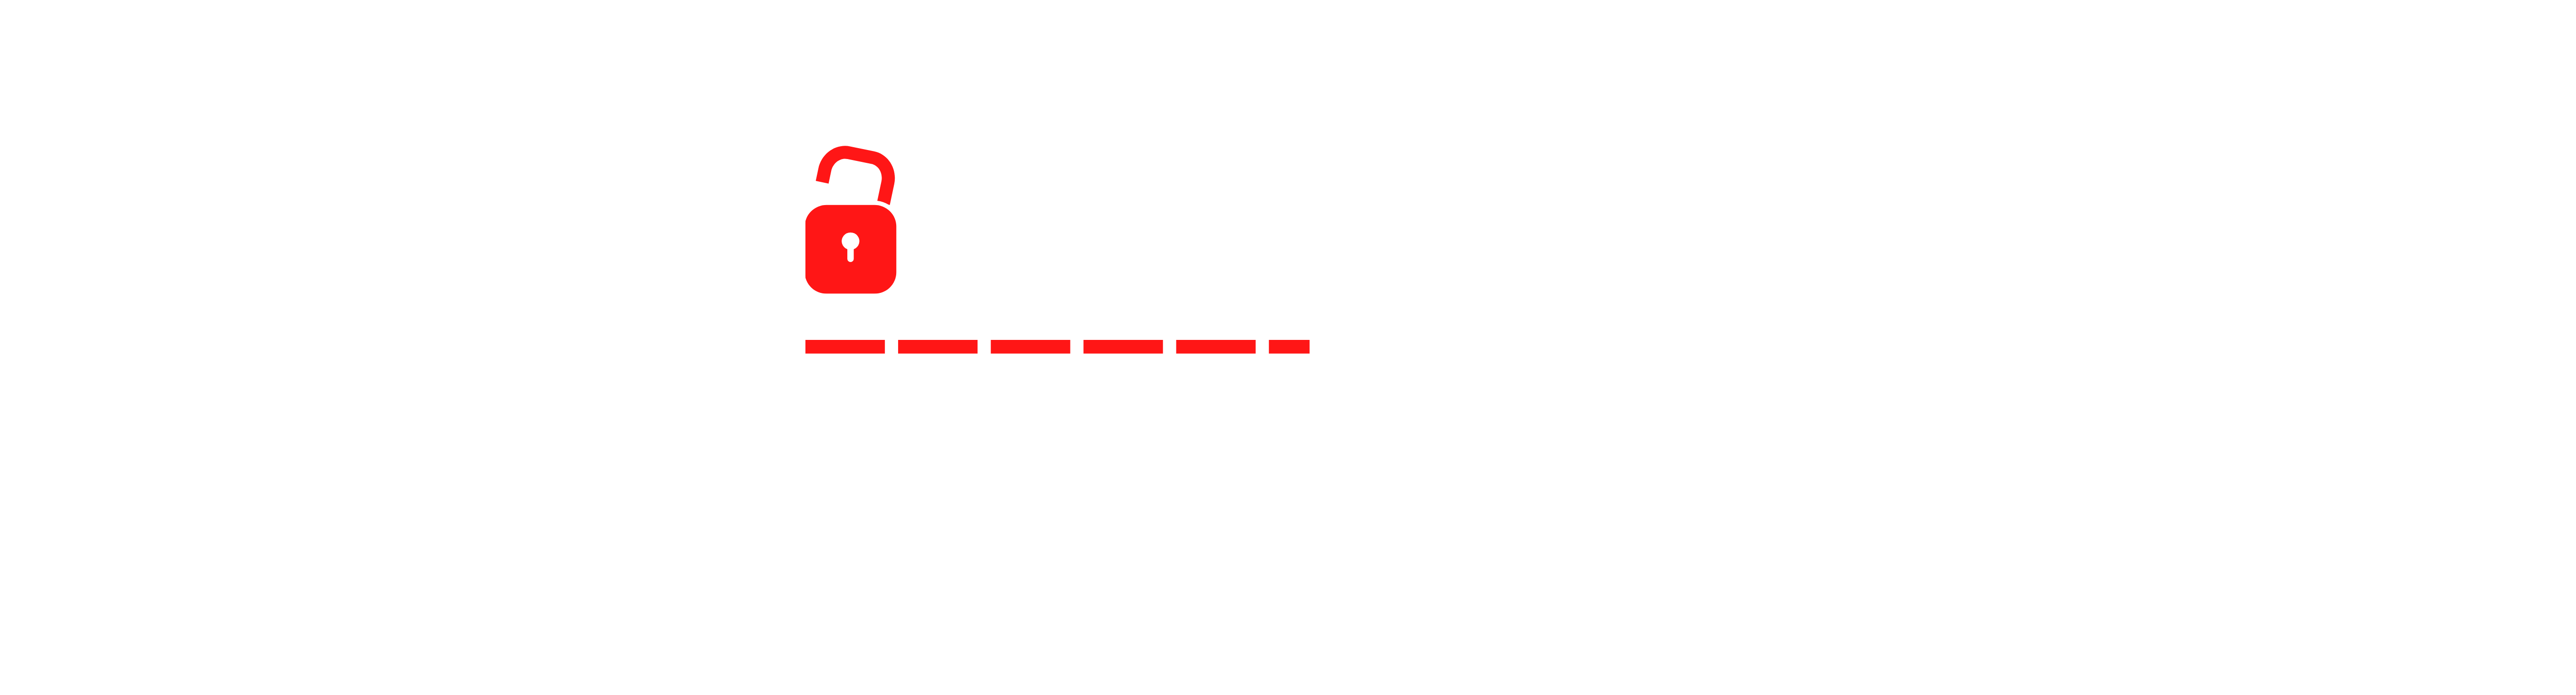 North Fork Car Vault